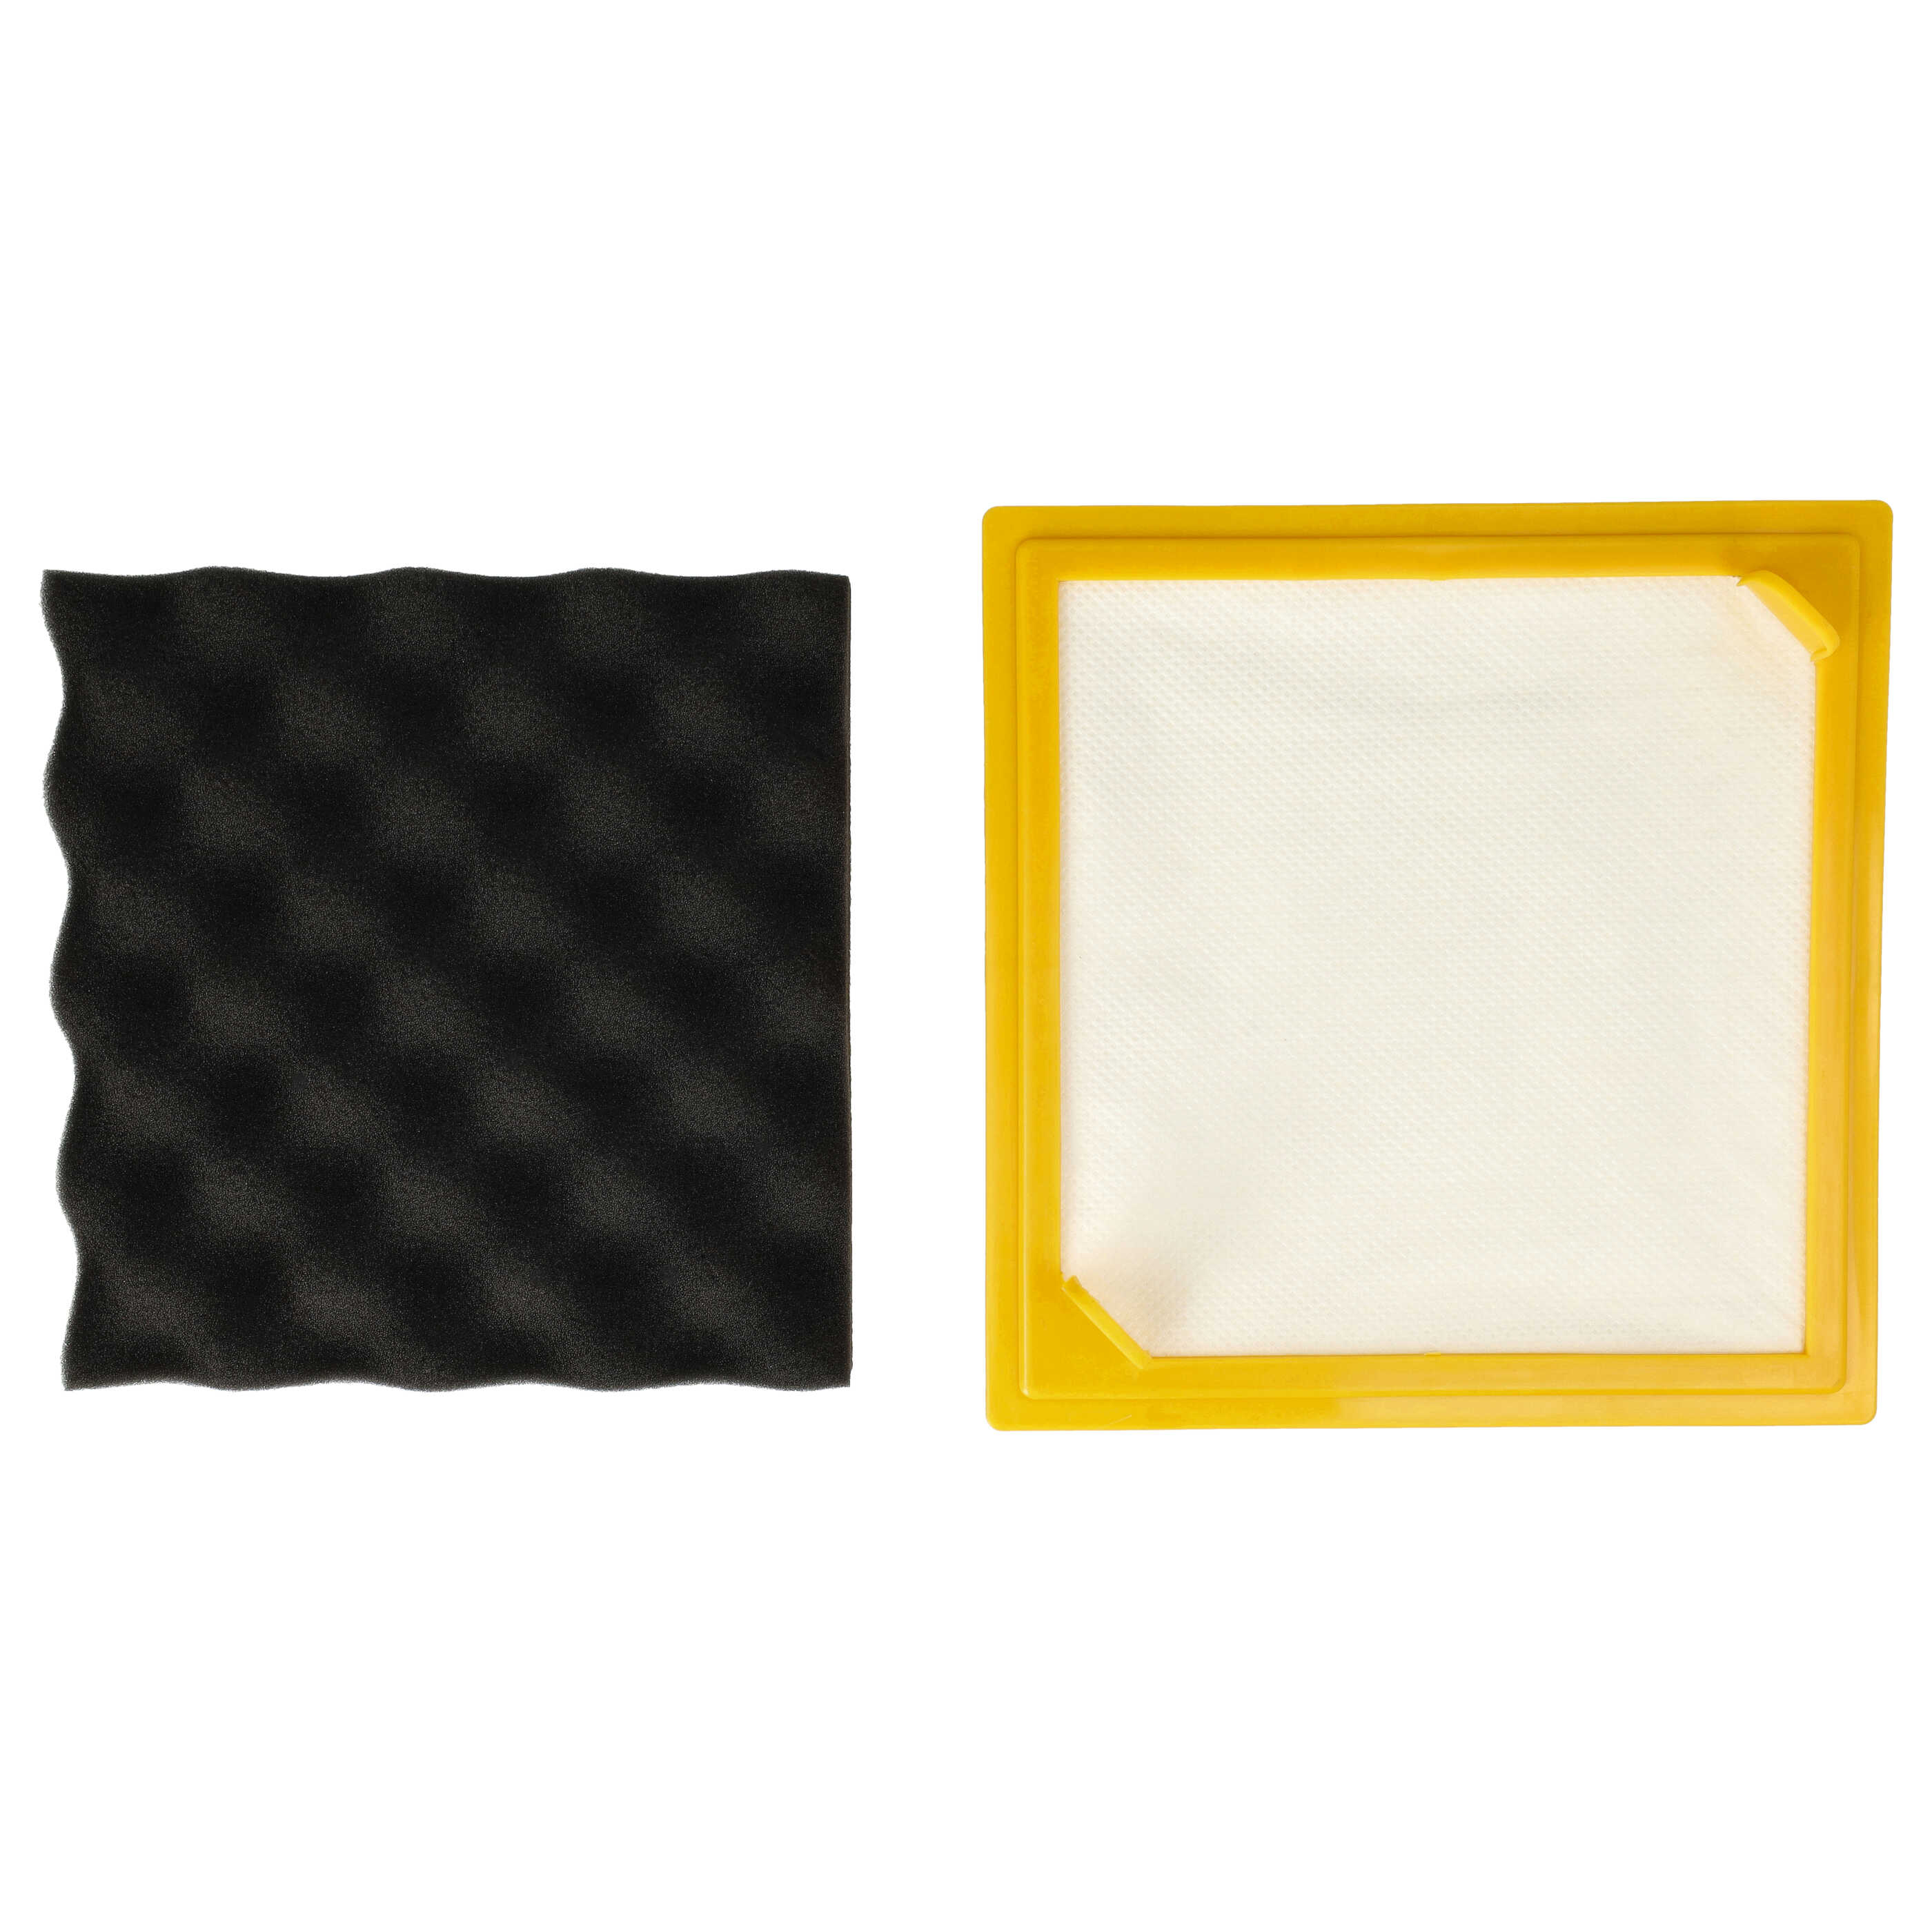 Filtro reemplaza Hoover 04365029, 04365062, T70 para aspiradora - filtro Hepa amarillo